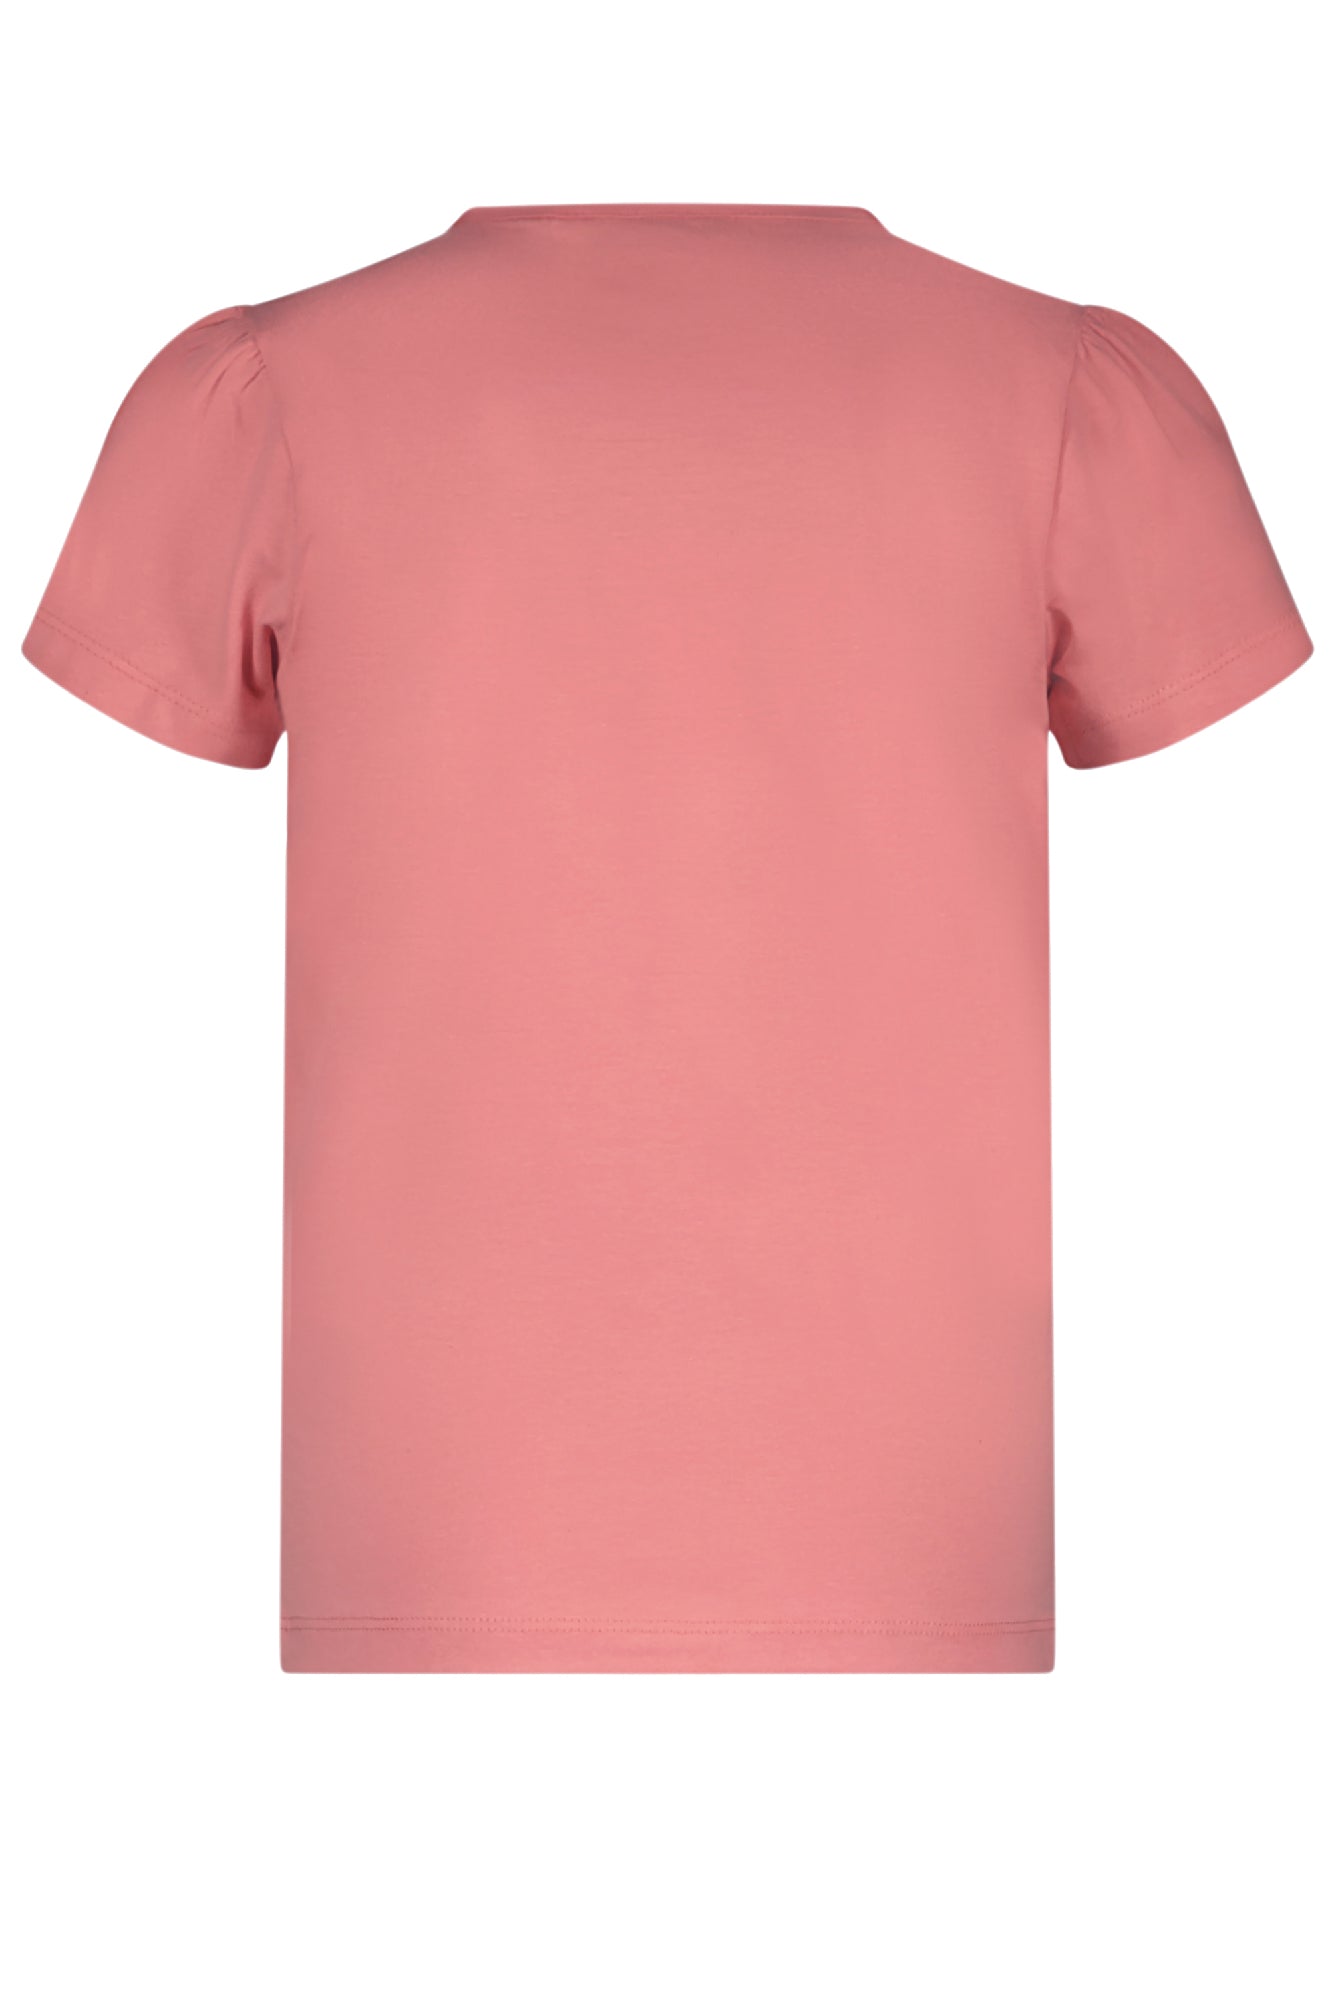 Meisjes Kantal tshirt s/sl with text message van NoNo in de kleur Peach Blossom in maat 134-140.